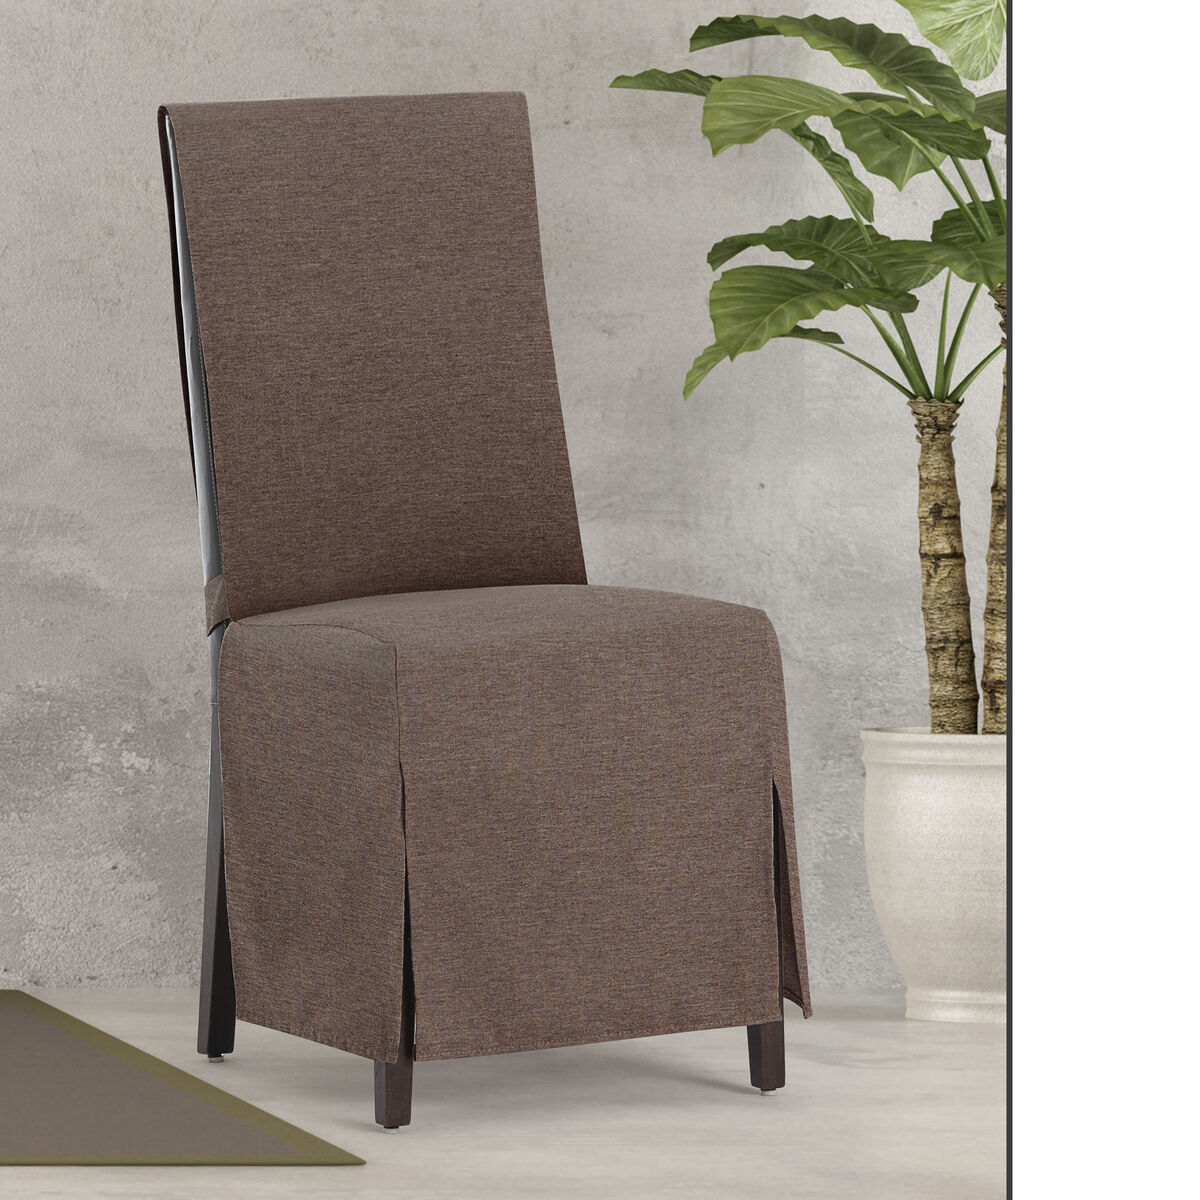 Chair Cover Eysa VALERIA Brown 40 x 135 x 45 cm 2 Units